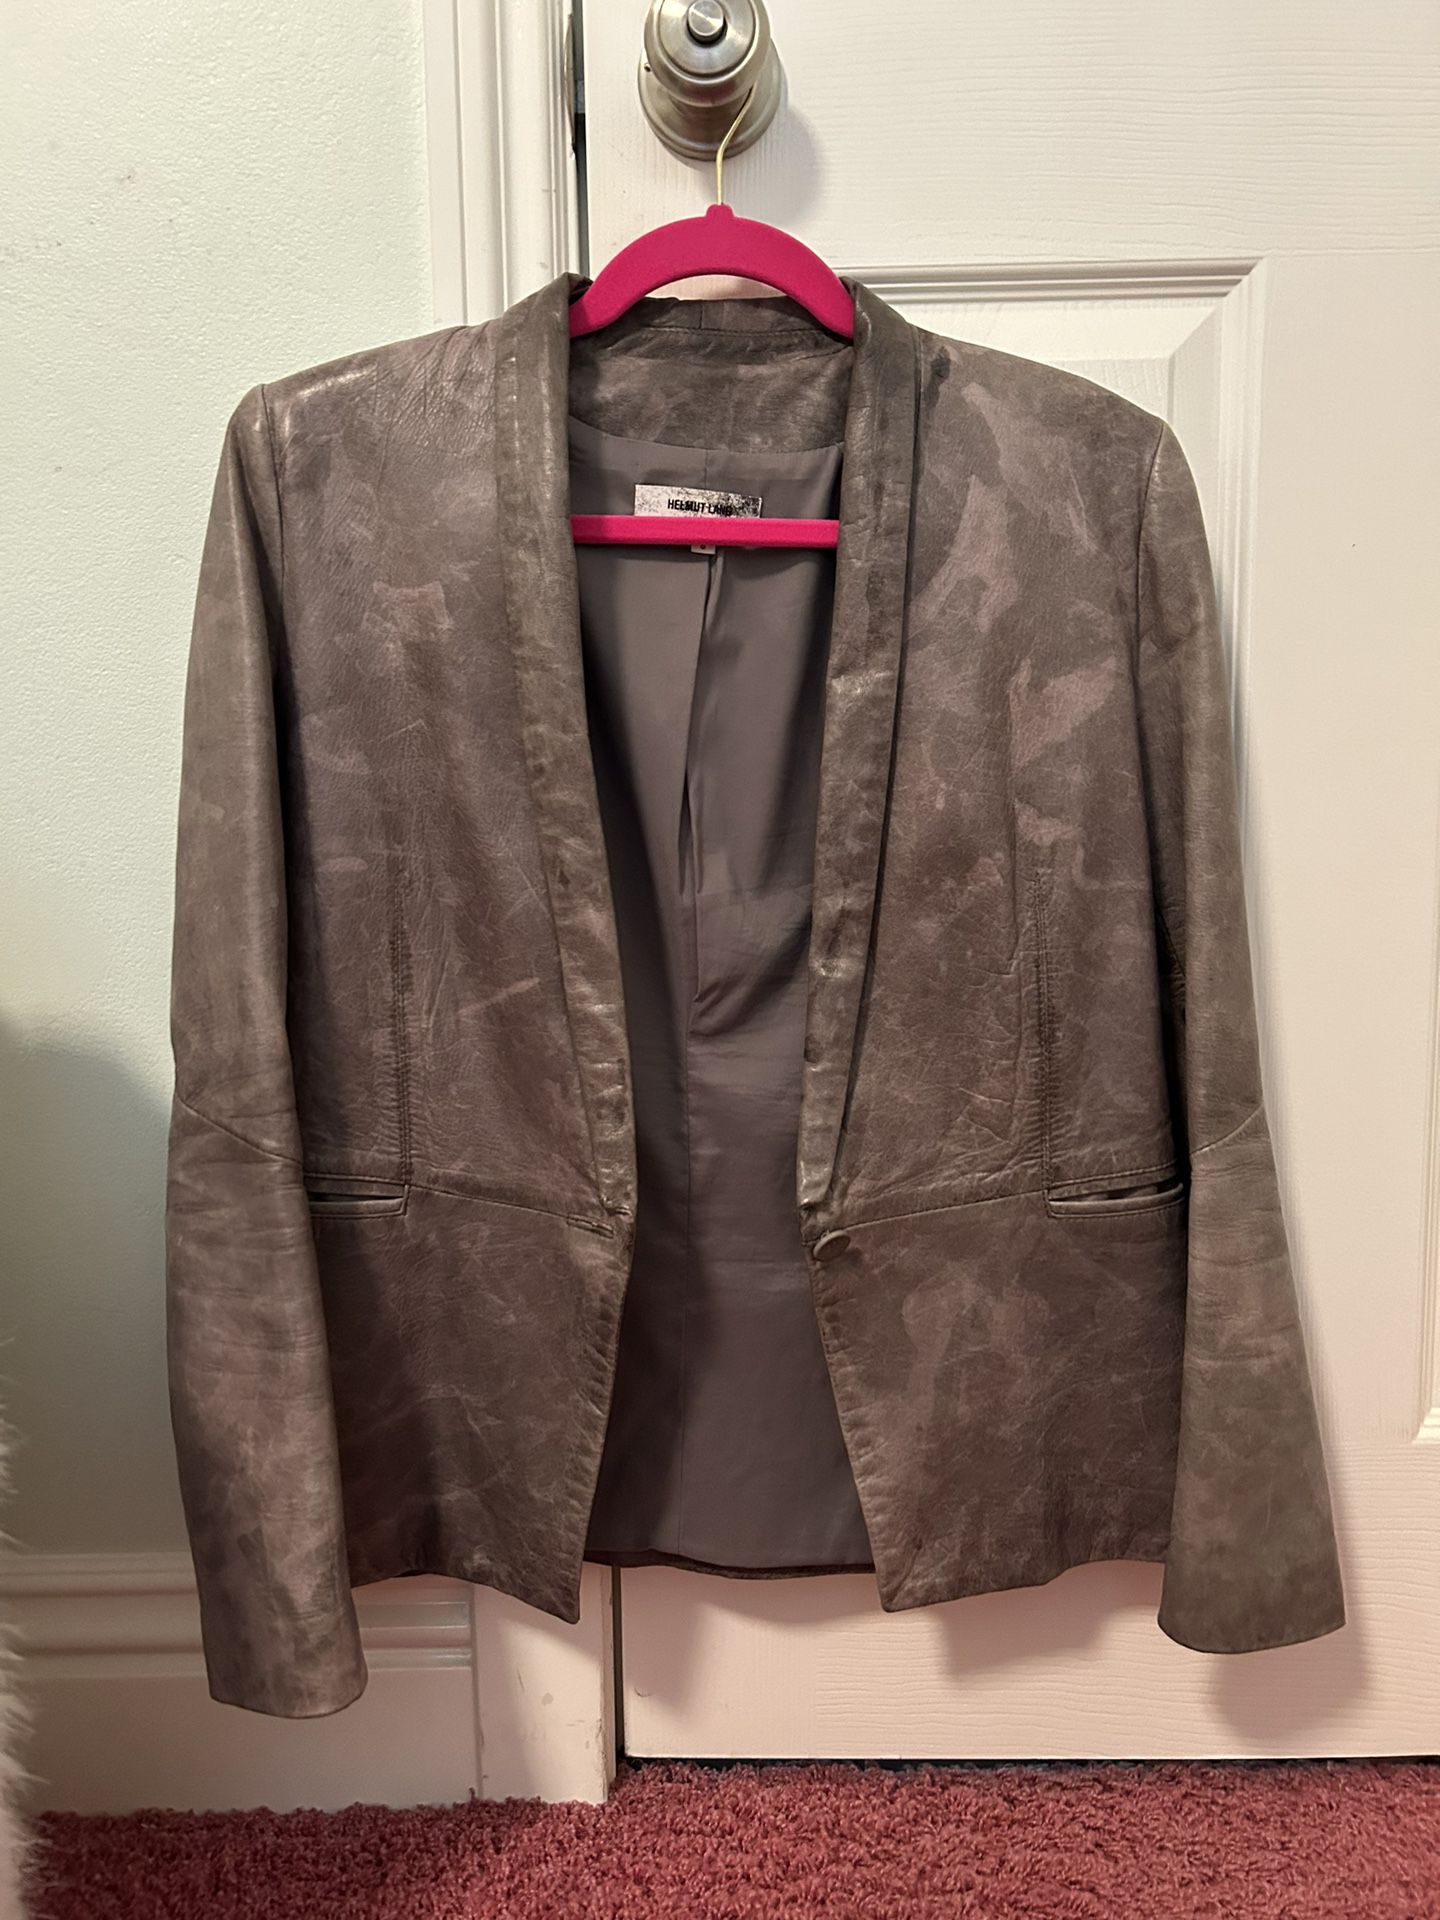 Helmut Lang Women’s Leather Jacket - Size 6